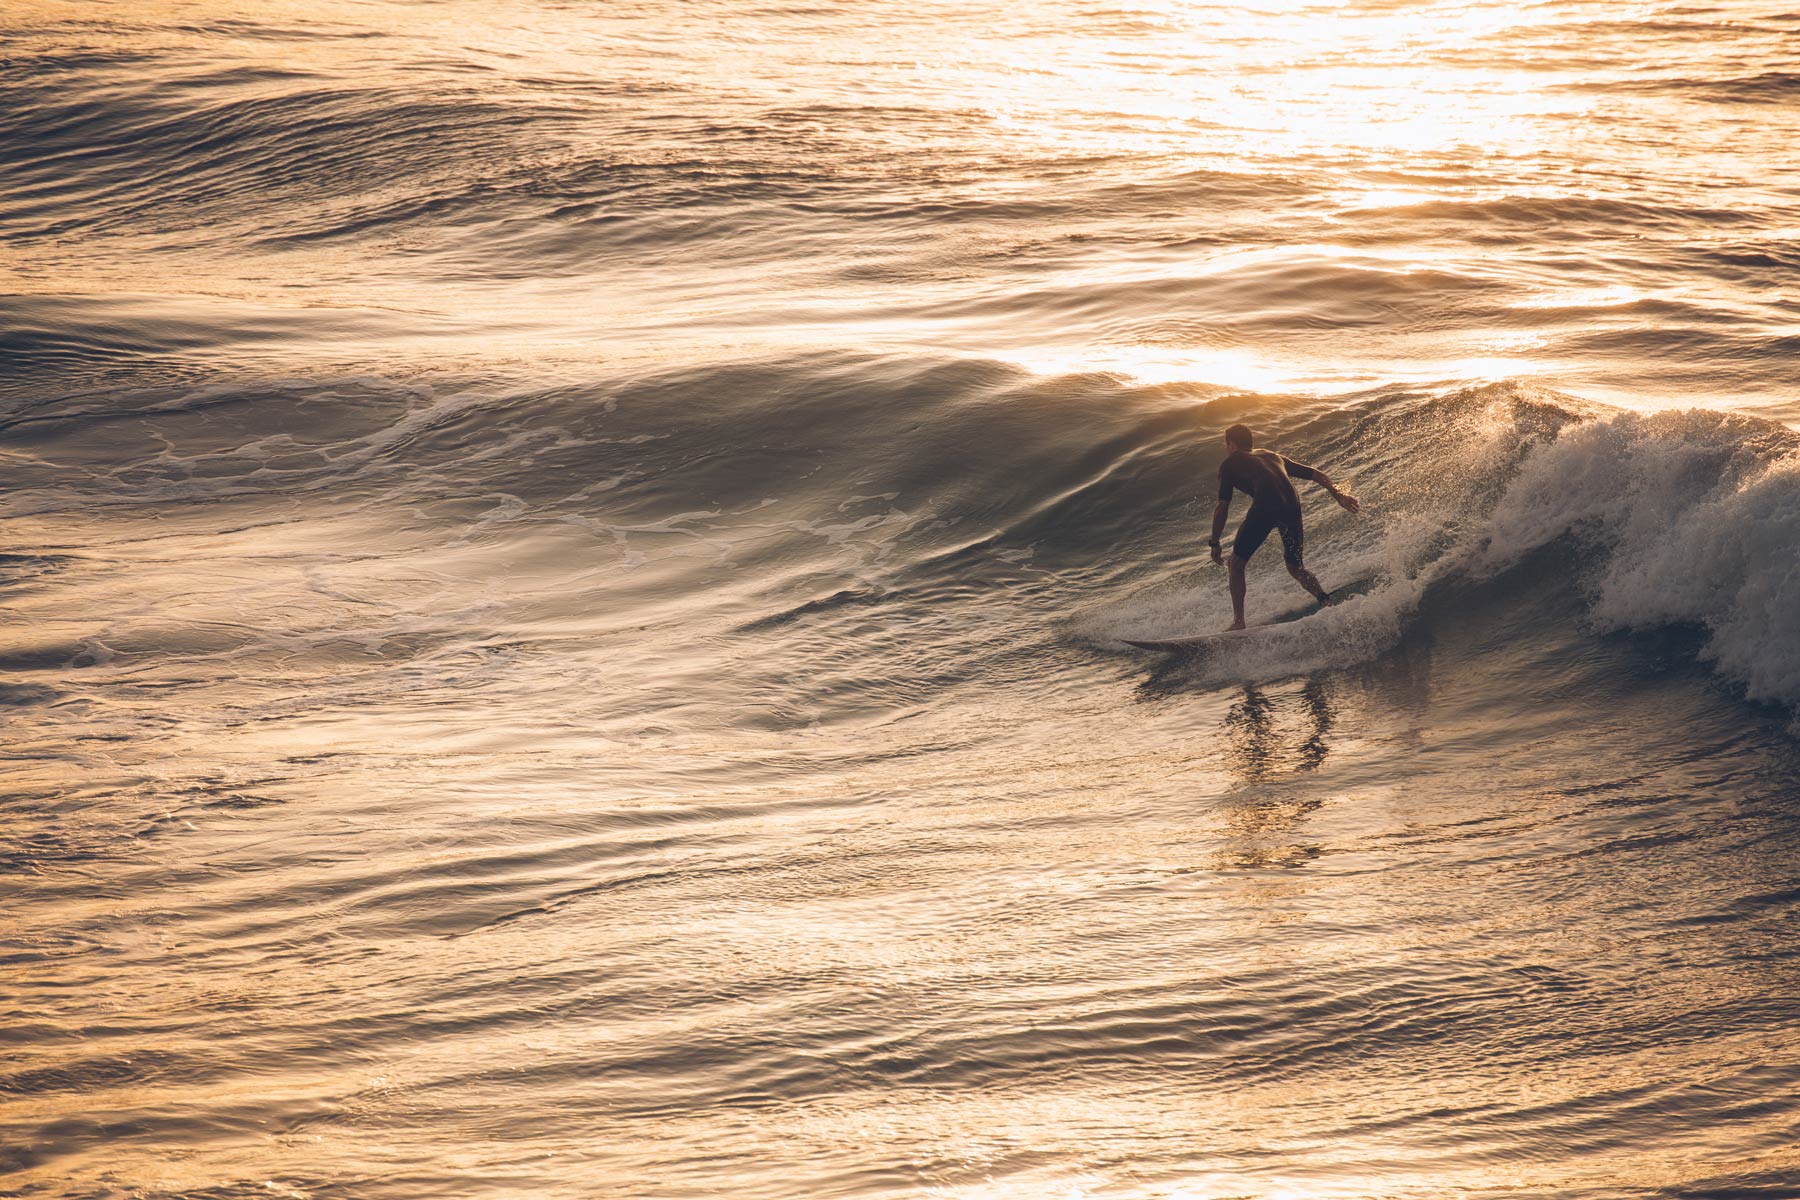 Bondi Beach Surfer